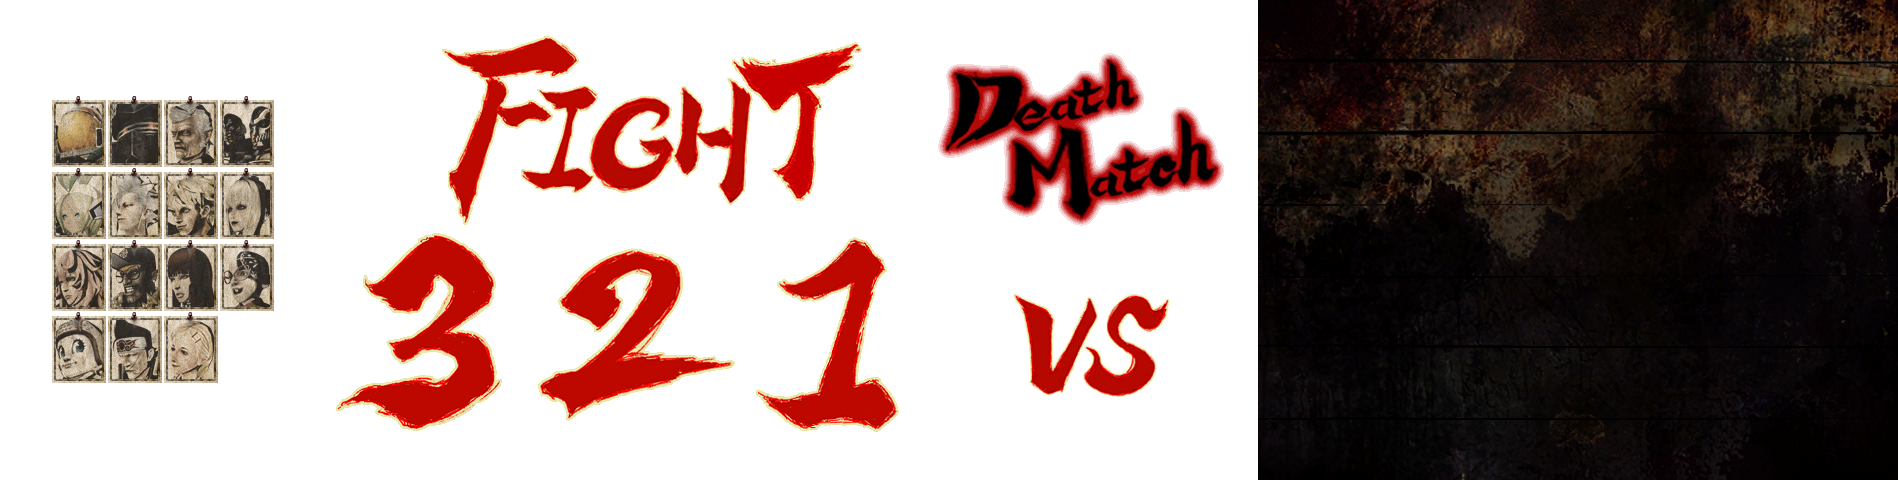 No More Heroes 2: Desperate Struggle - Deathmatch UI